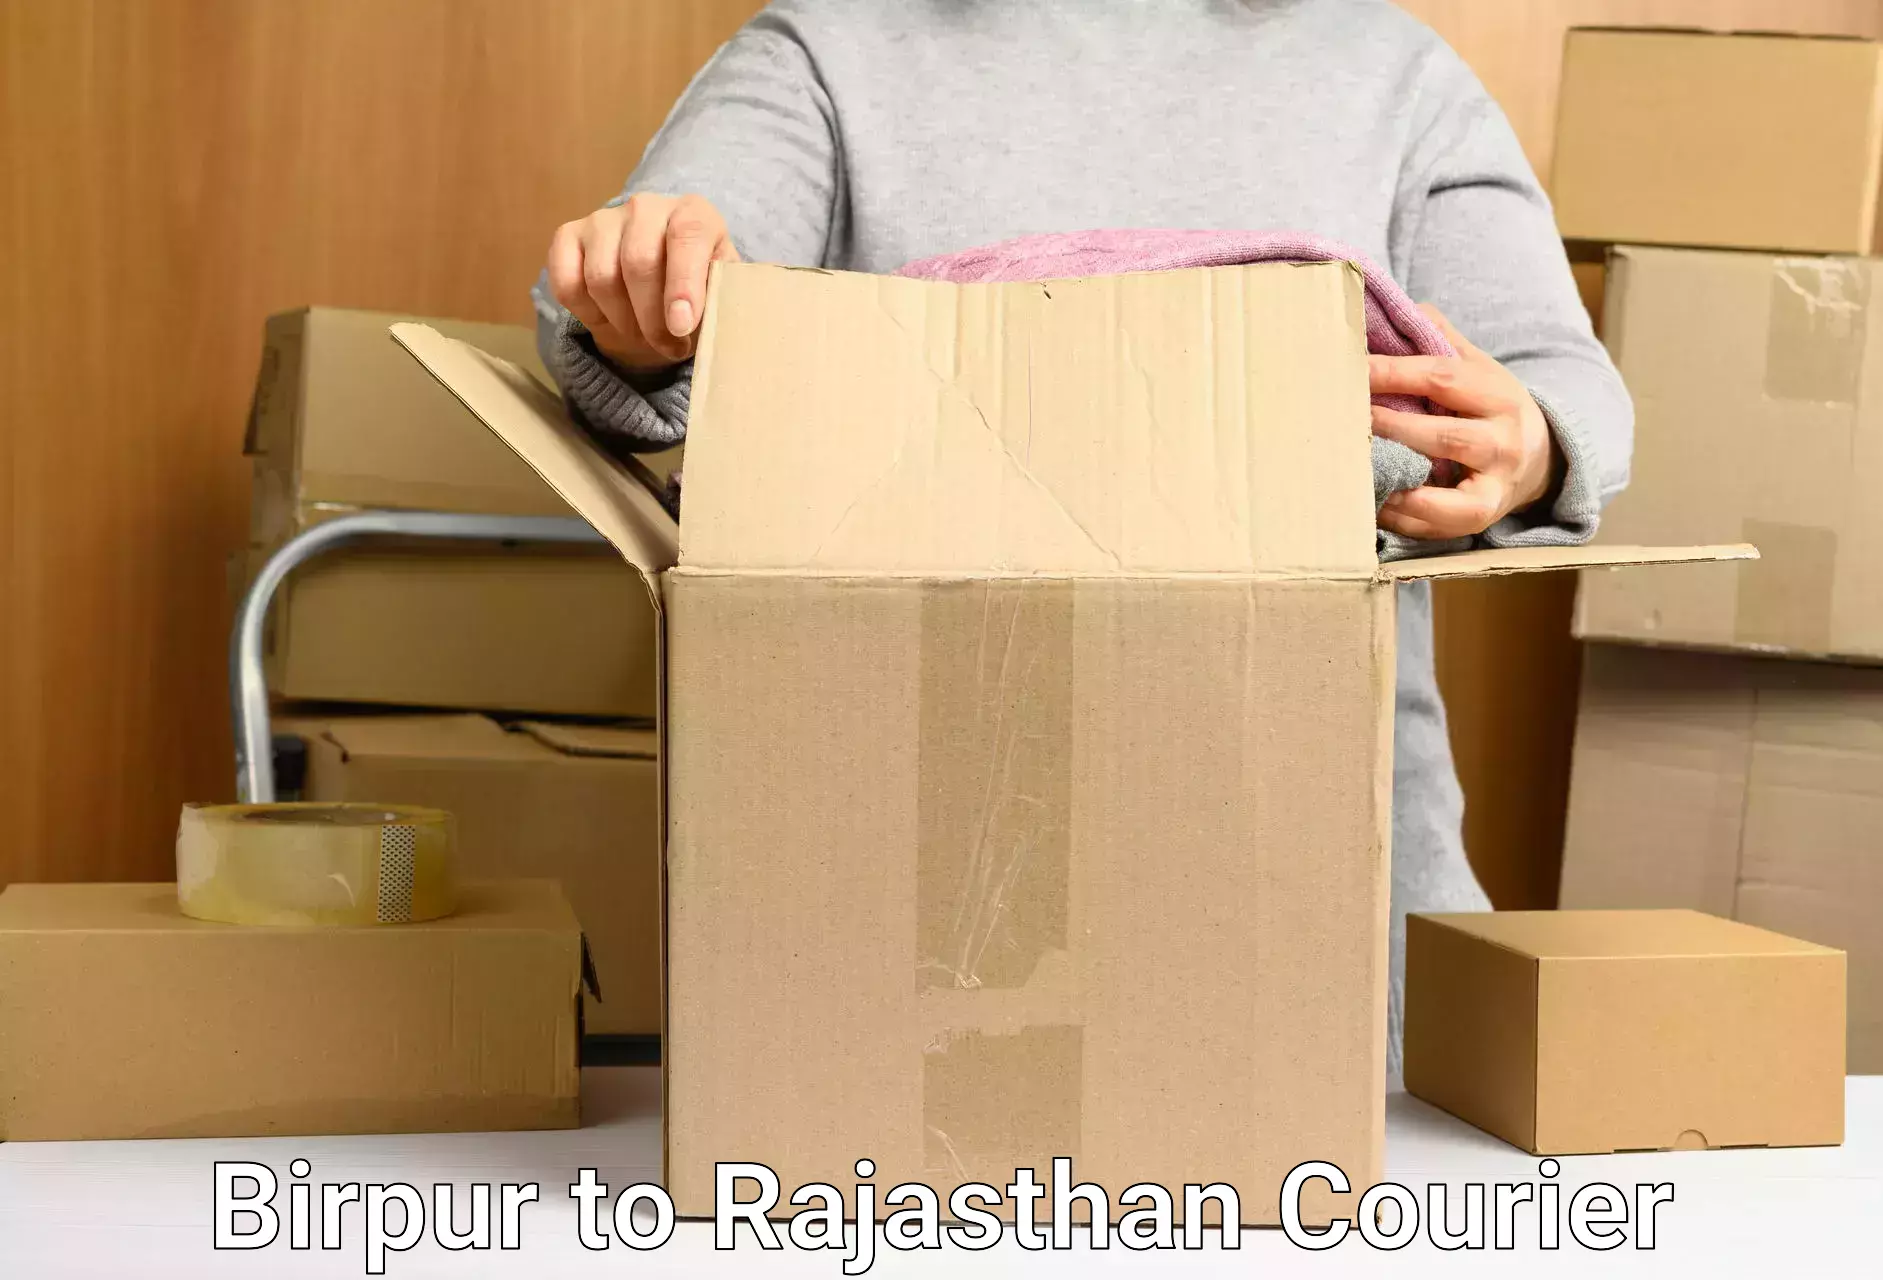 Courier service innovation Birpur to Ras Pali